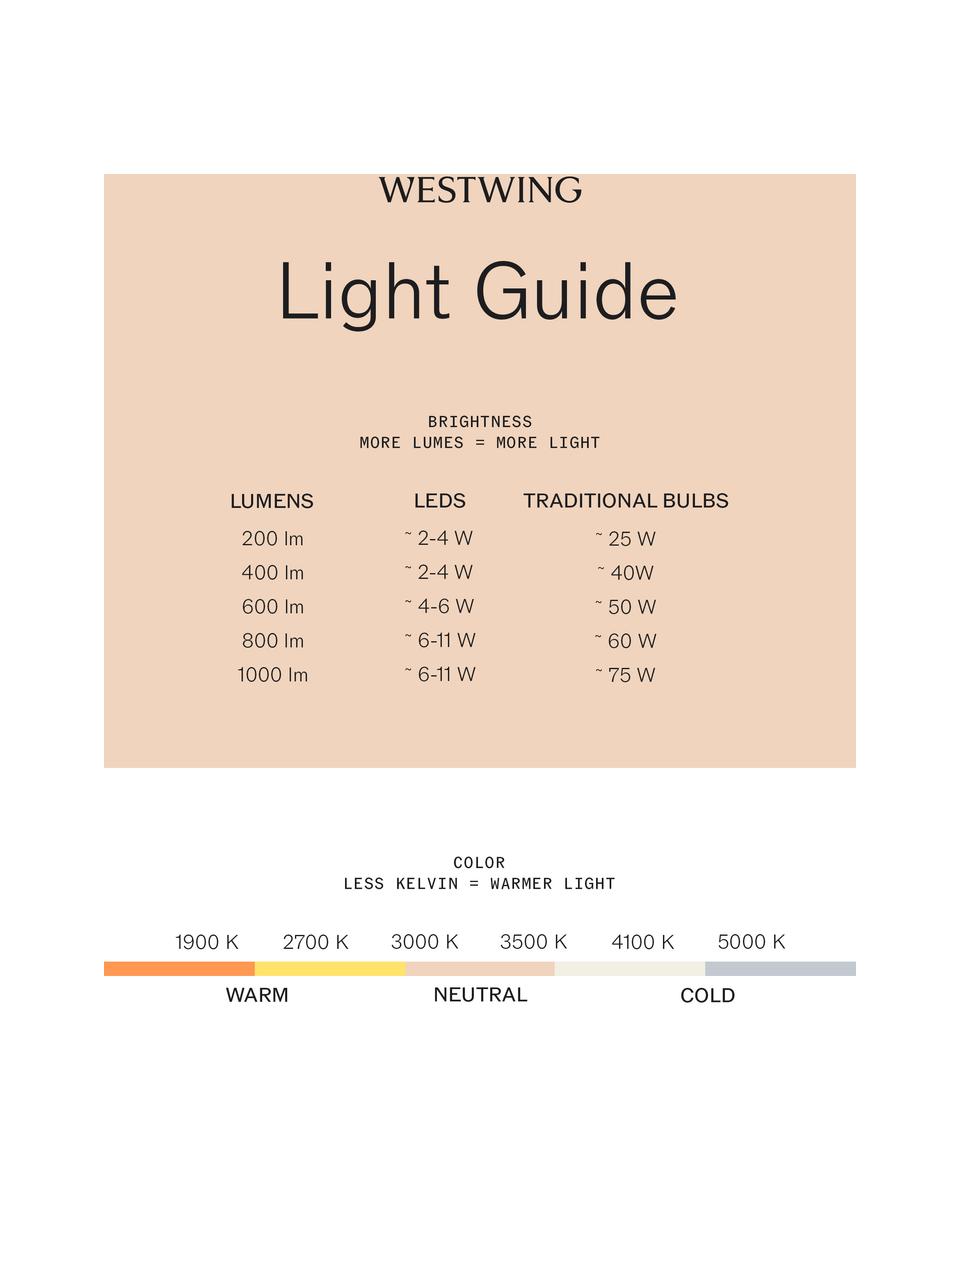 Applique a LED luce regolabile Hester, Paralume: vetro, Bianco latte, effetto marmo, Larg. 20 x Alt. 26 cm